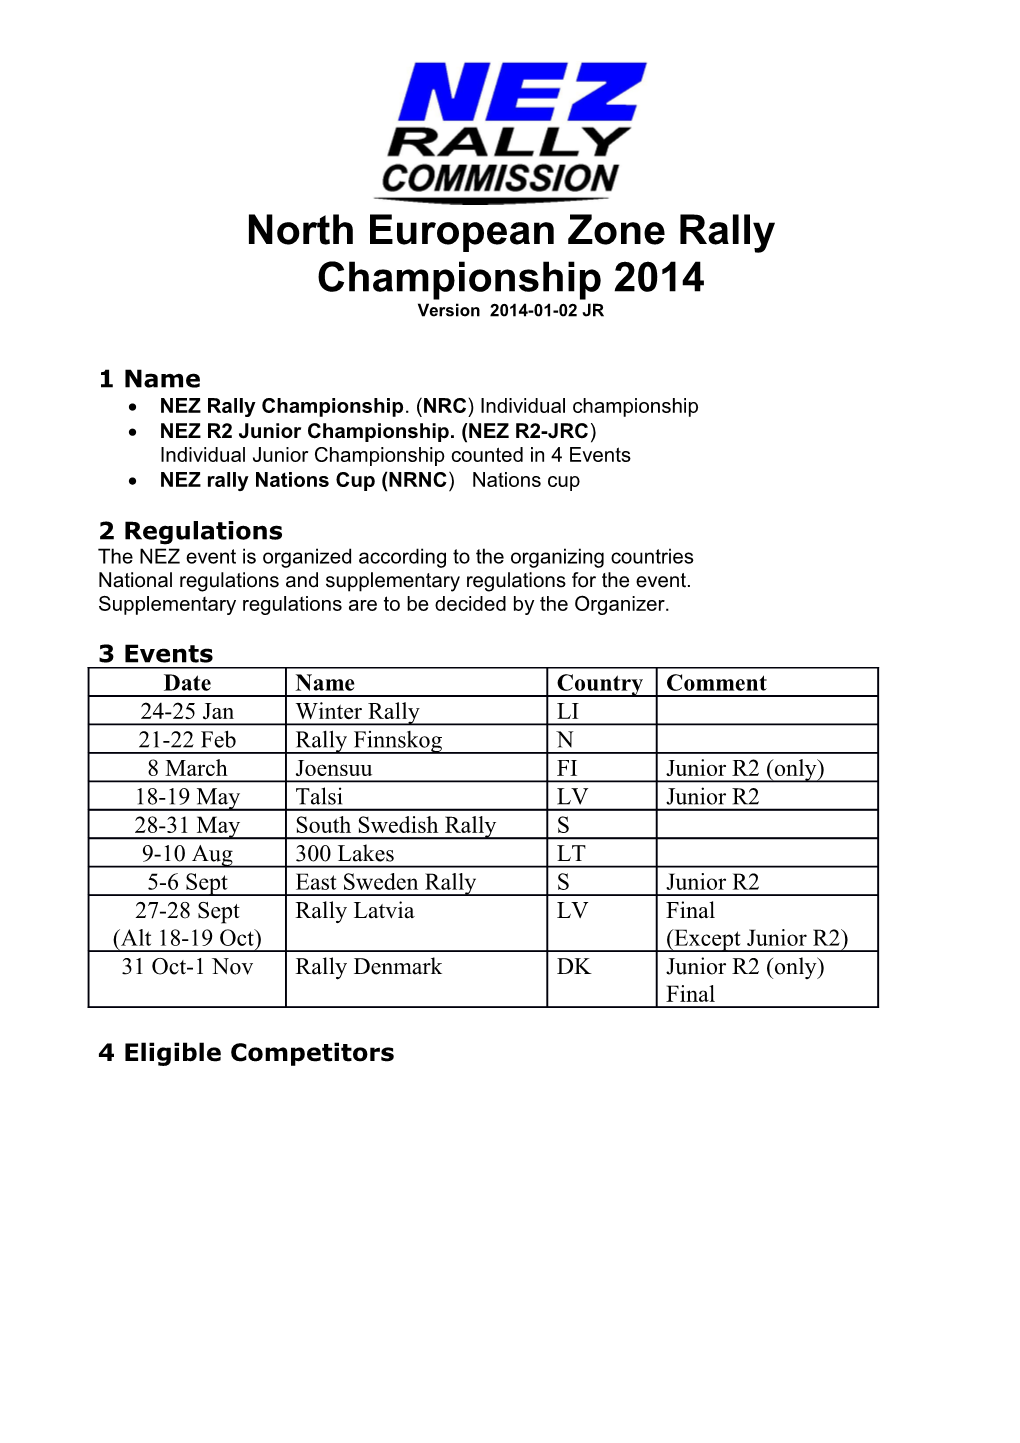 North European Zone Rally Championship 2014